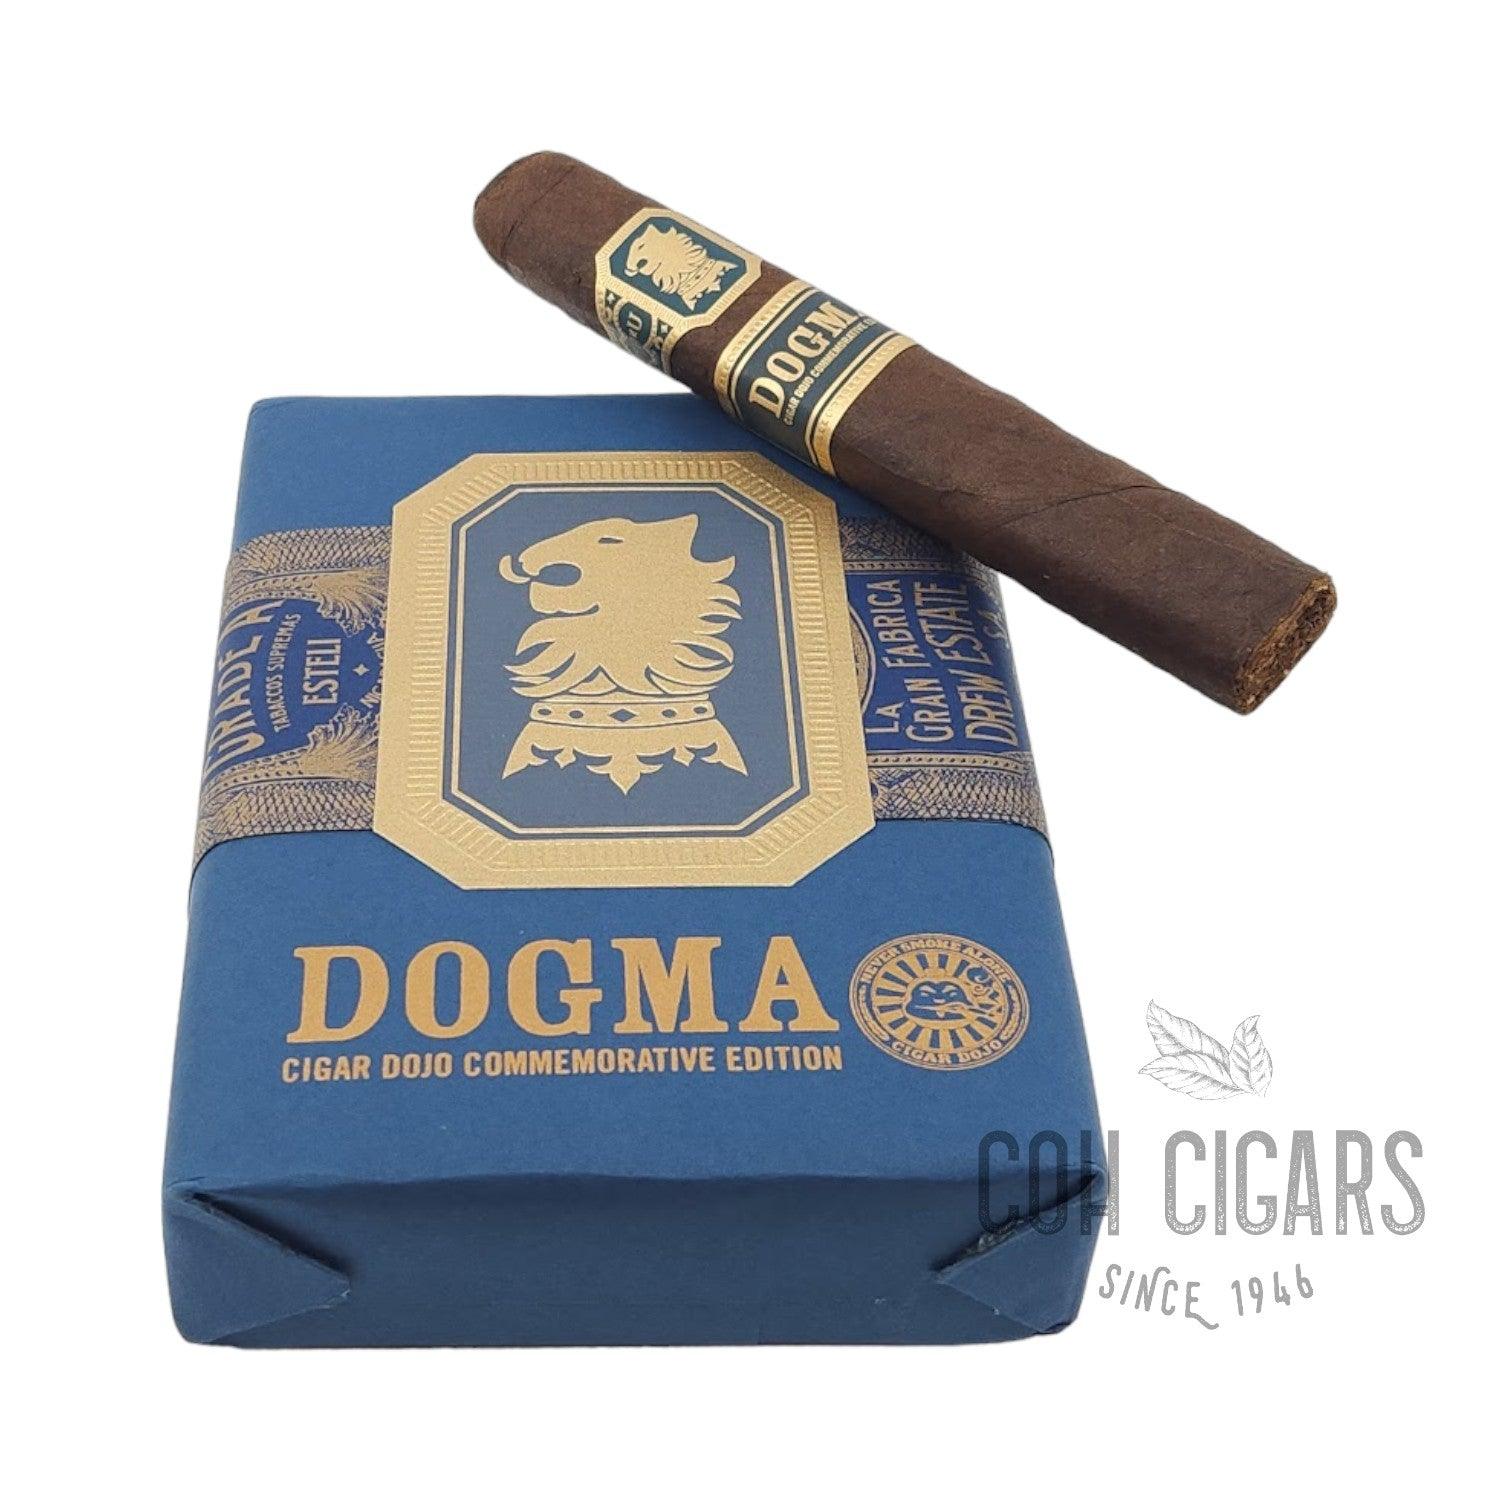 Drew Estate Cigar | Liga Undercrown Dogma | Box 10 - hk.cohcigars